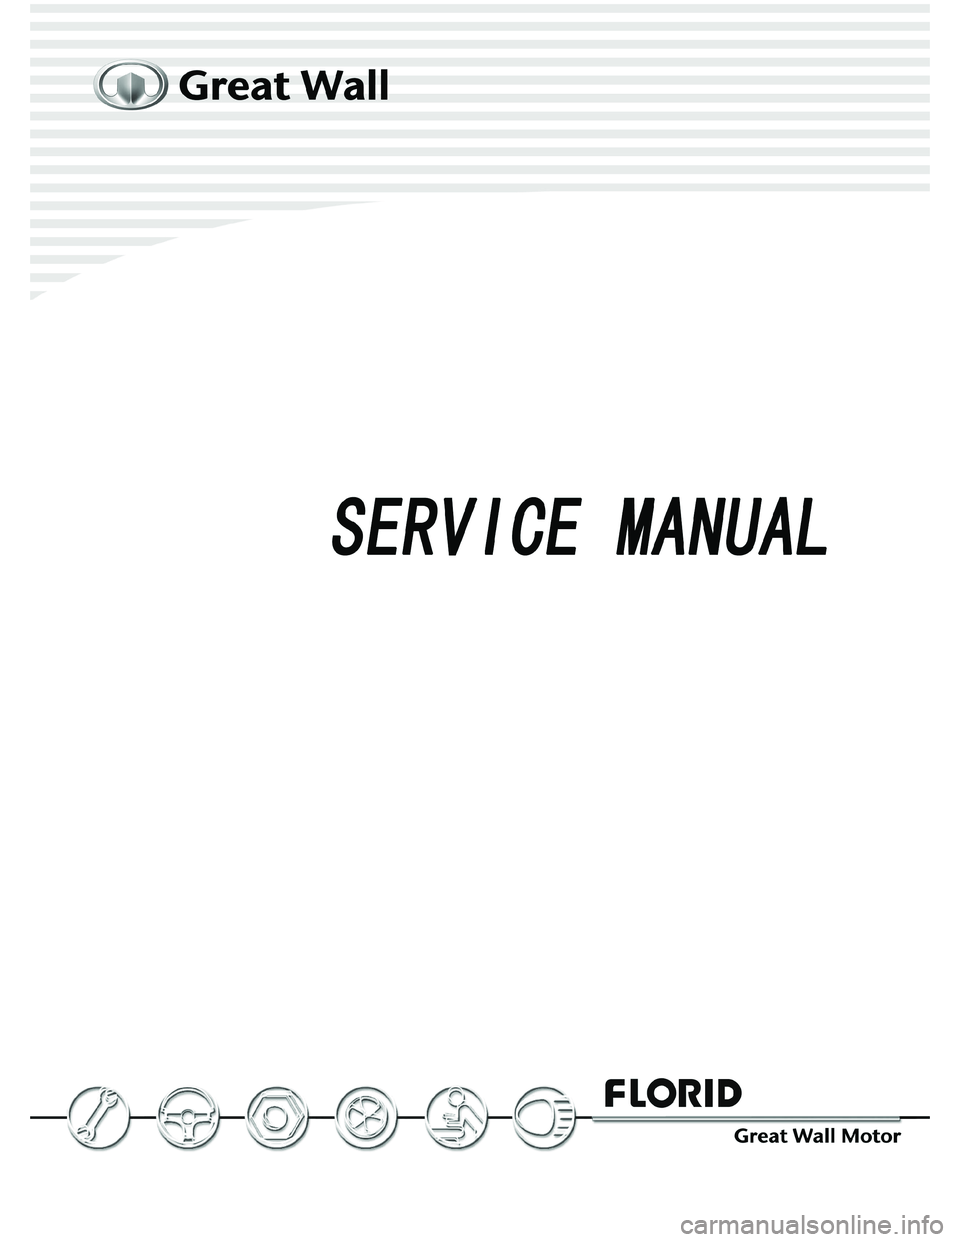 GREAT WALL FLORID 2008  Service Manual 